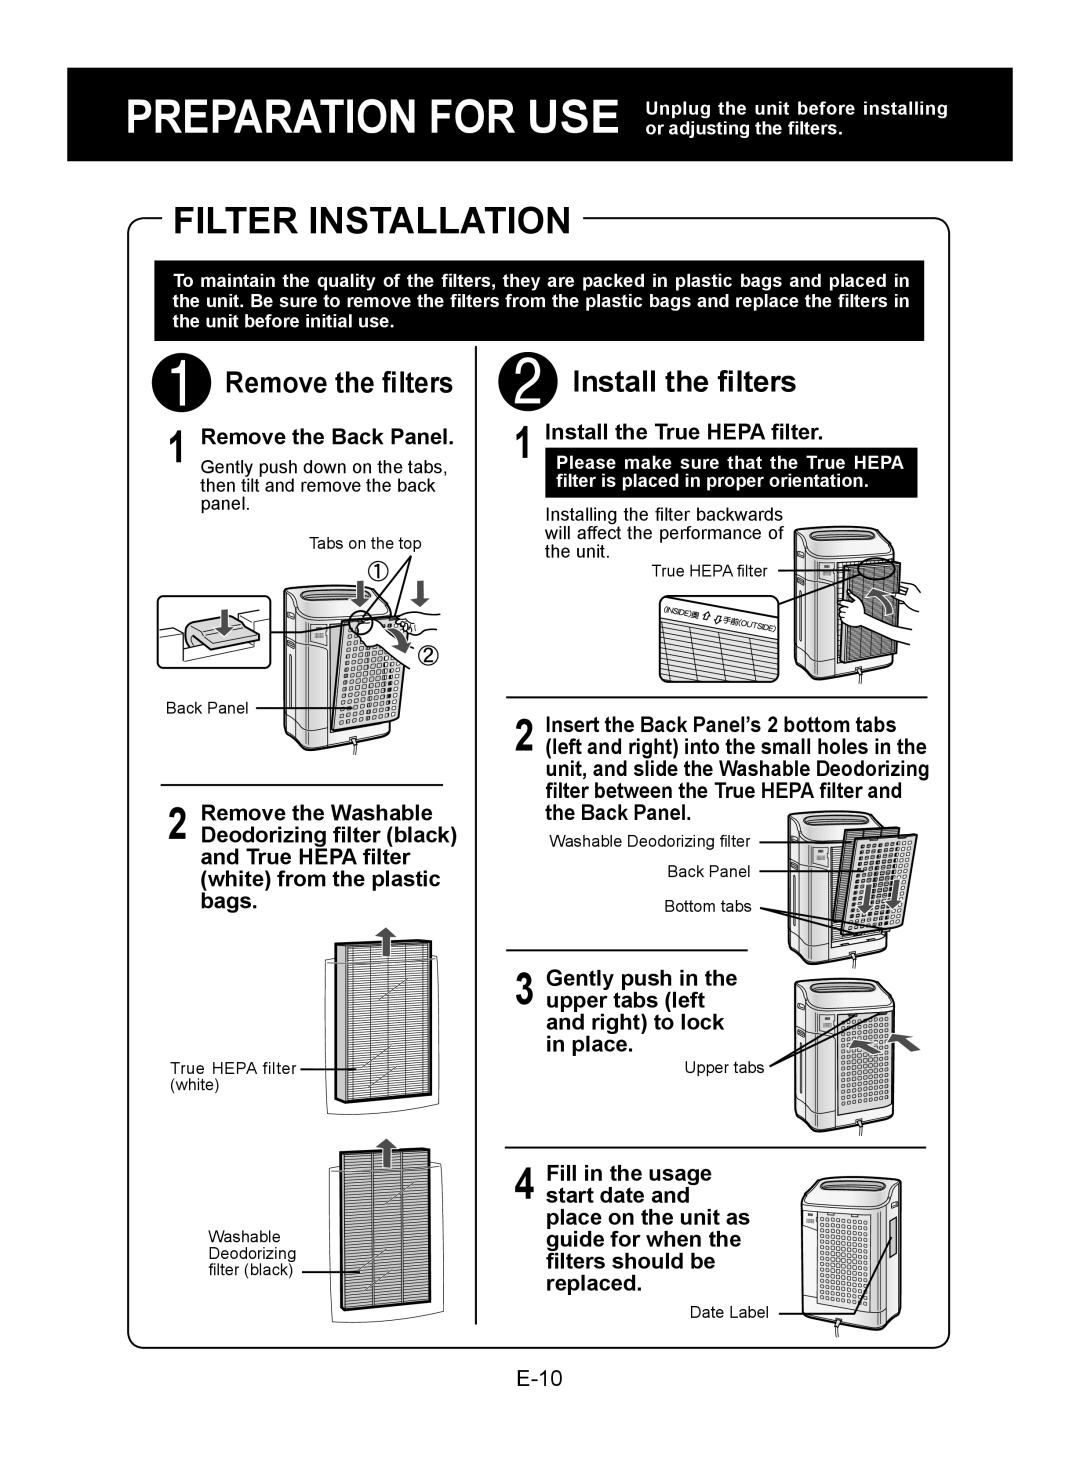 Sharp KC-850U operation manual Filter Installation, Remove the filters, Install the filters, Remove the Back Panel 